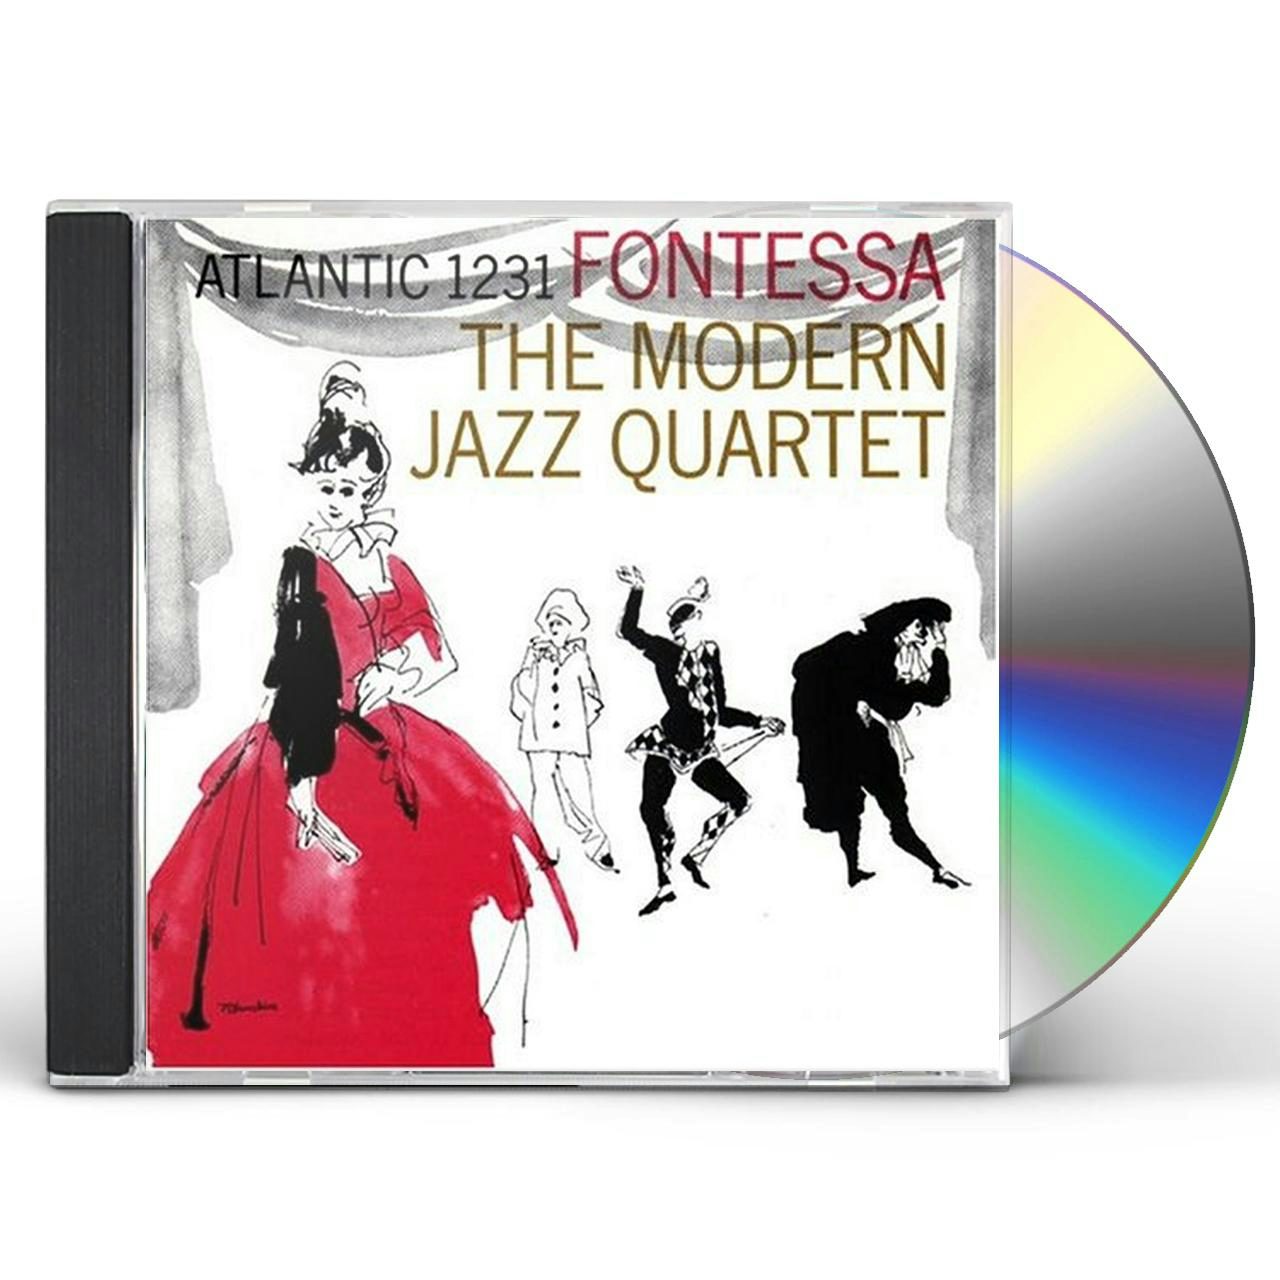 The Modern Jazz Quartet FONTESSA CD